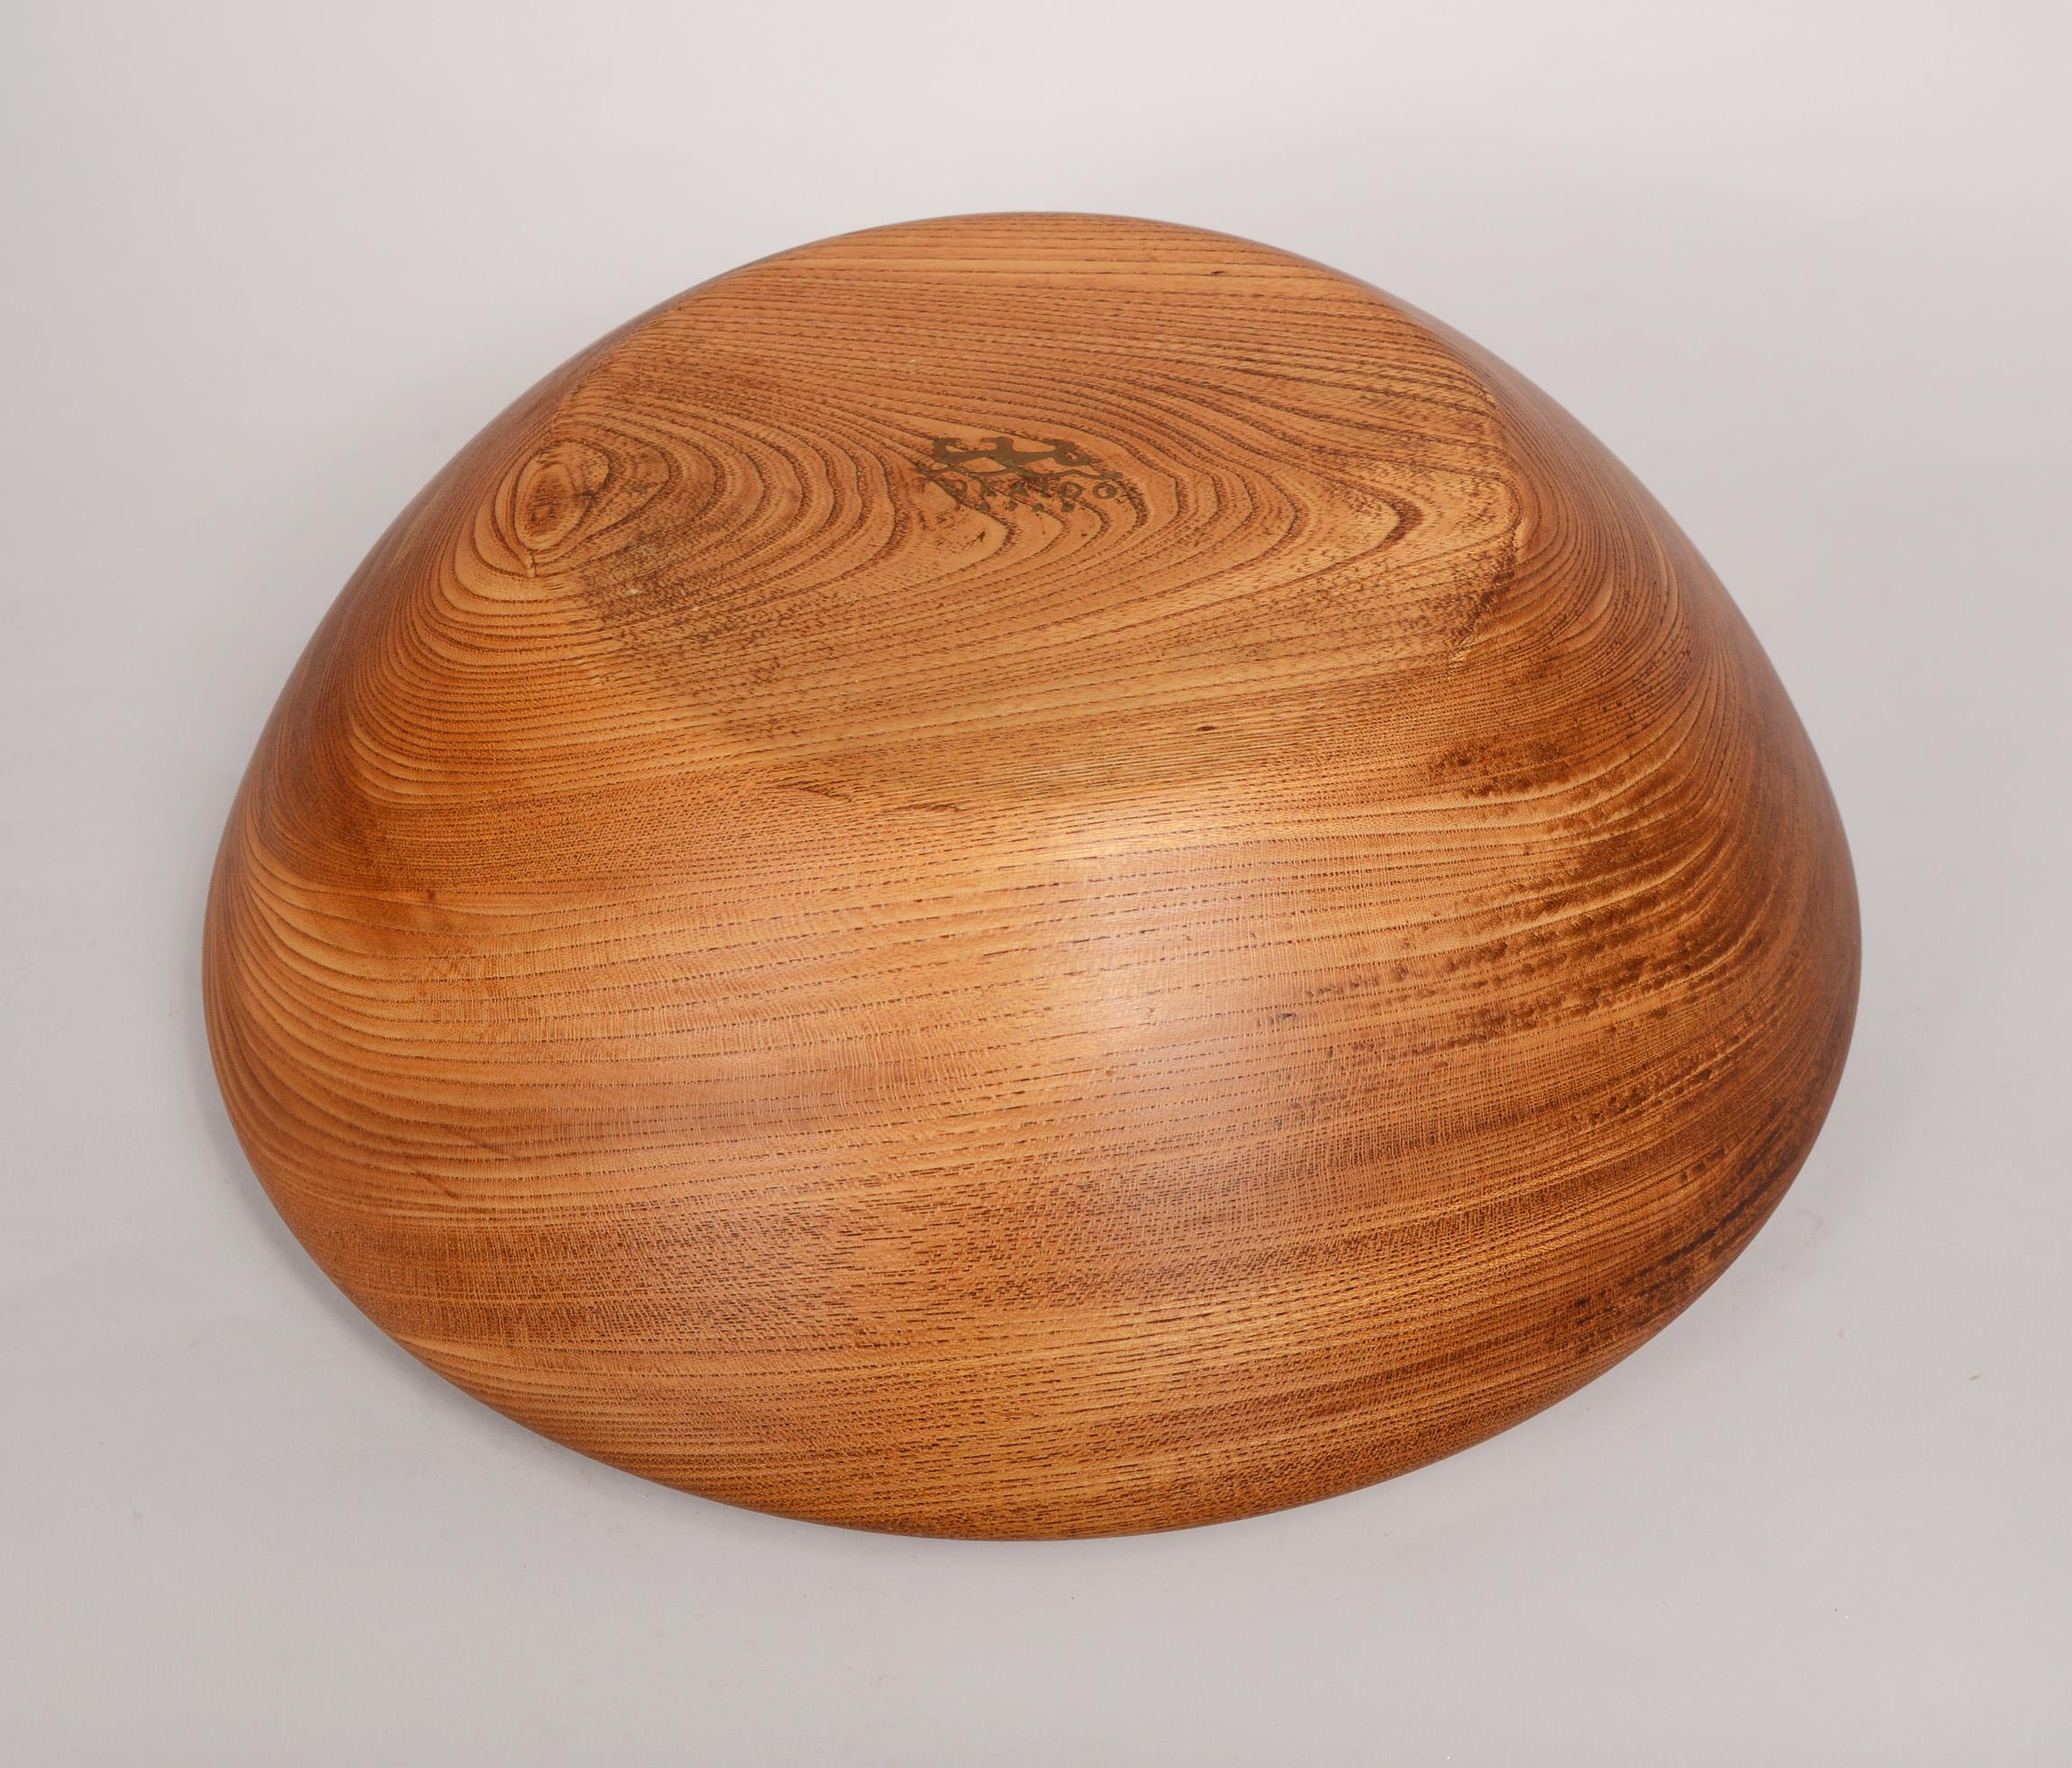 Large Bowl in Keyaki Wood by Tokaido Japan 1